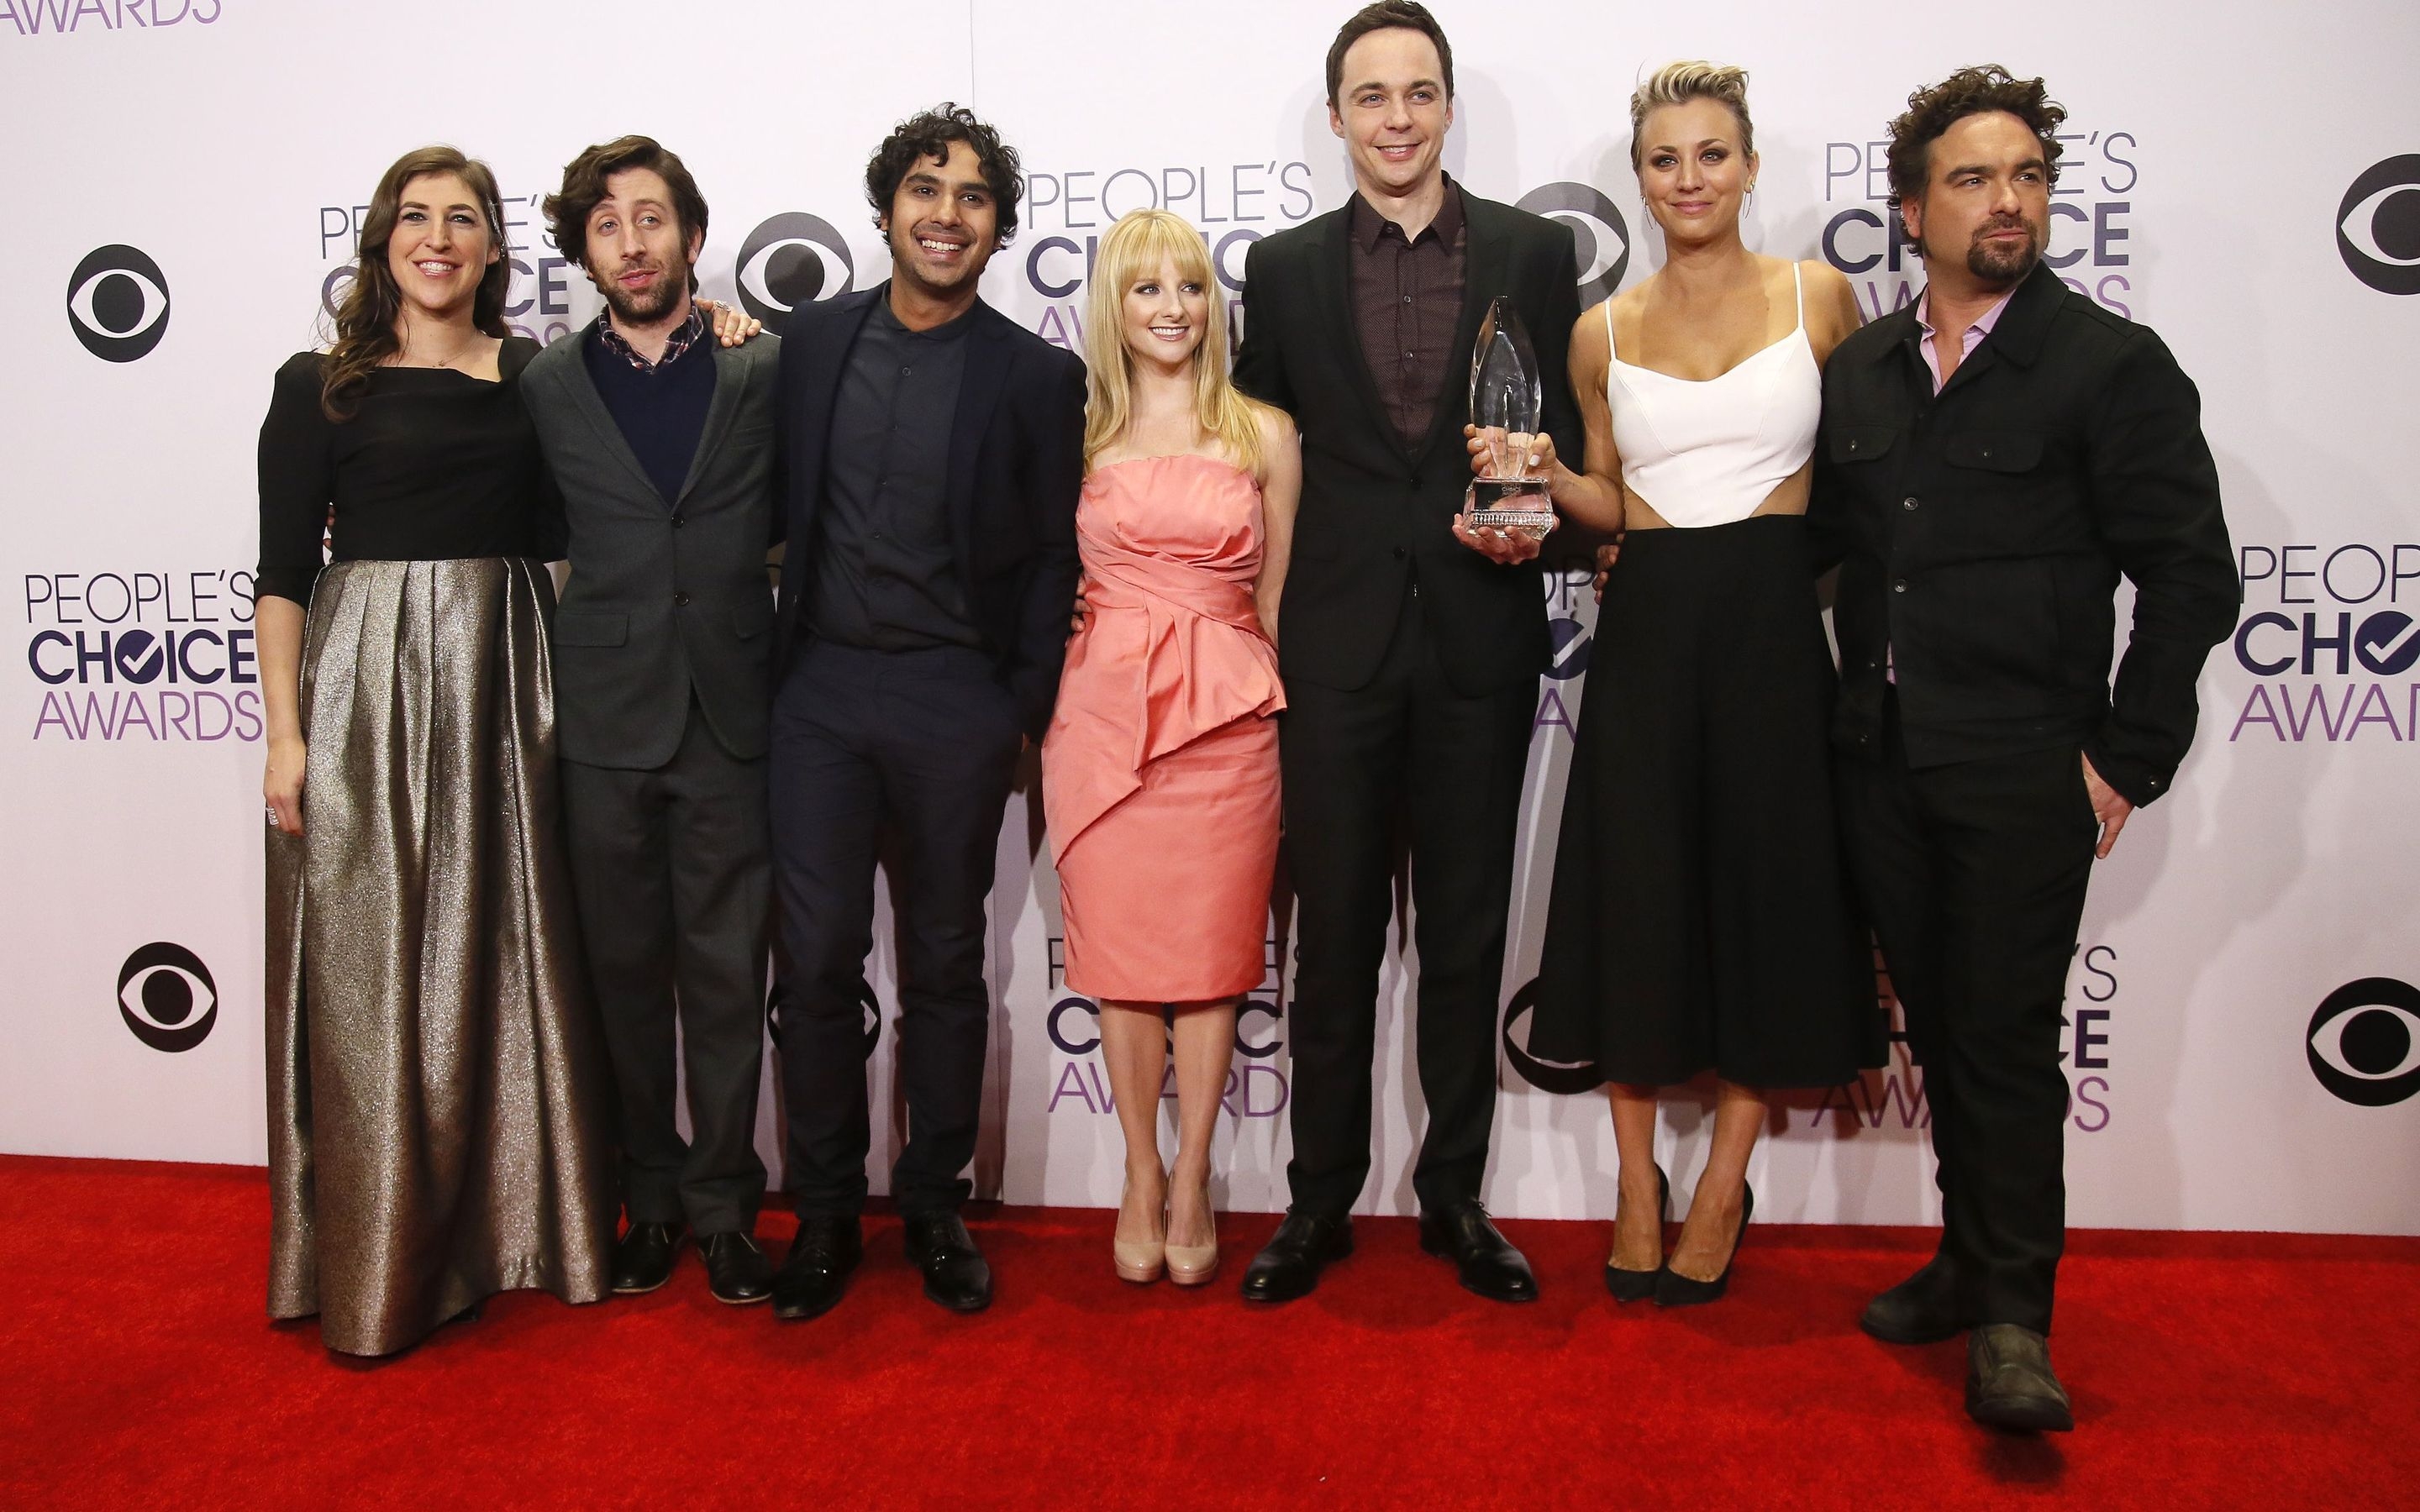 The Big Bang Theory Peoples Choice Awards for 2880 x 1800 Retina Display resolution